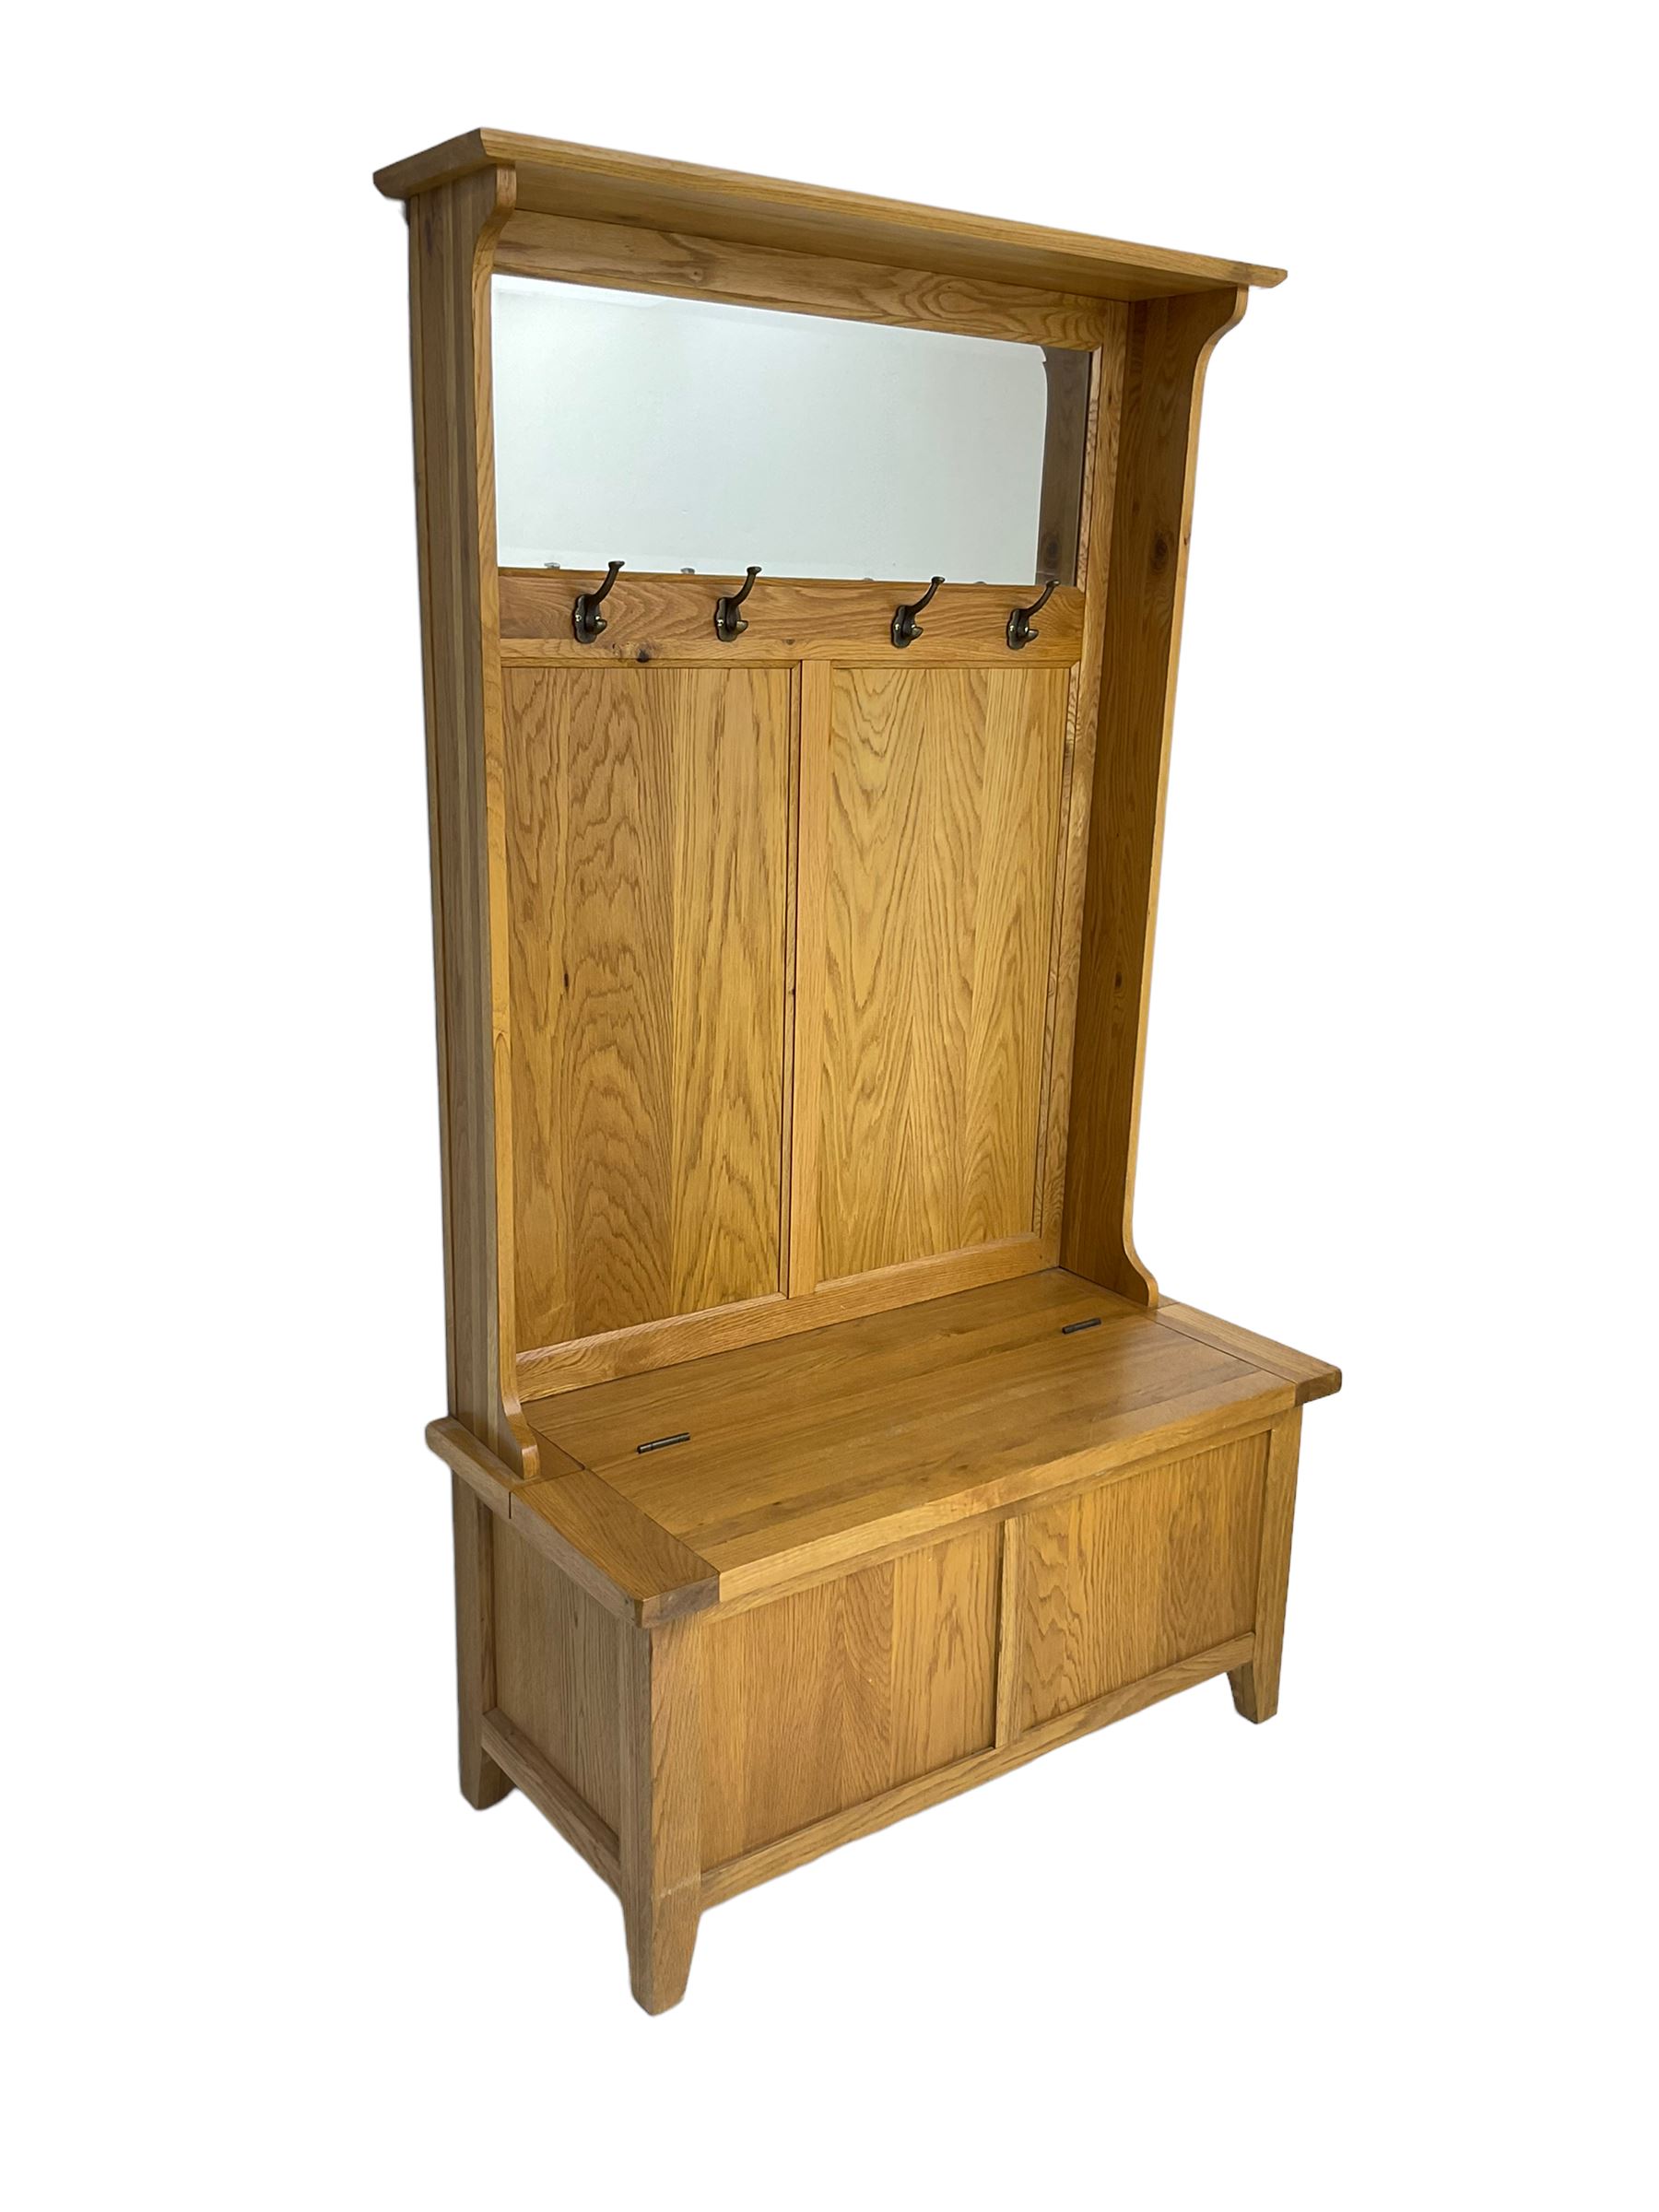 Oak mirror-back hall bench - Image 3 of 5